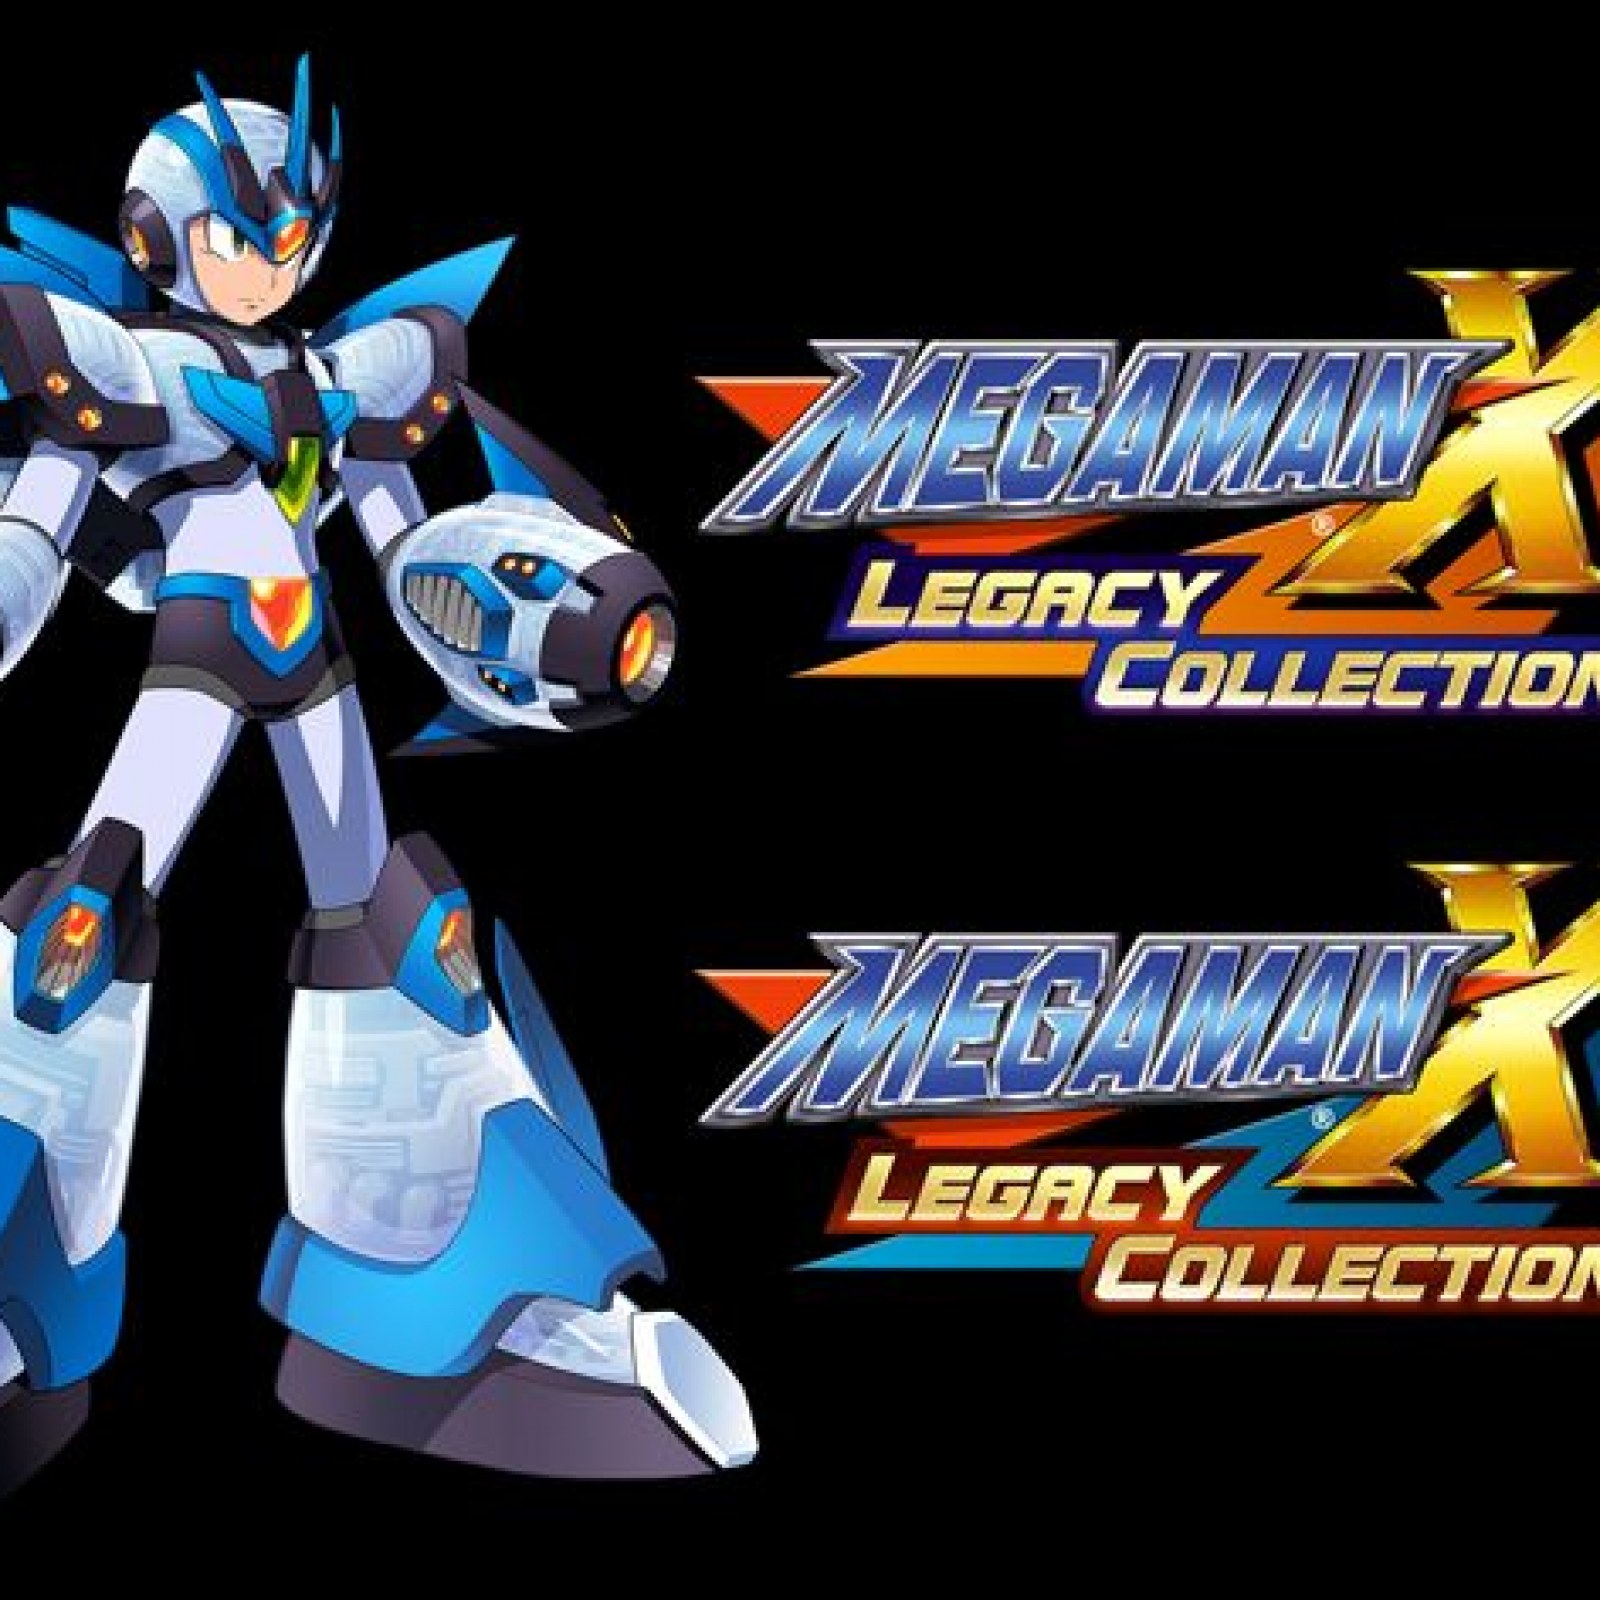 Megaman collection. Mega man x Legacy collection. Mega man Legacy collection. Mega man x collection. Megaman x Legacy.